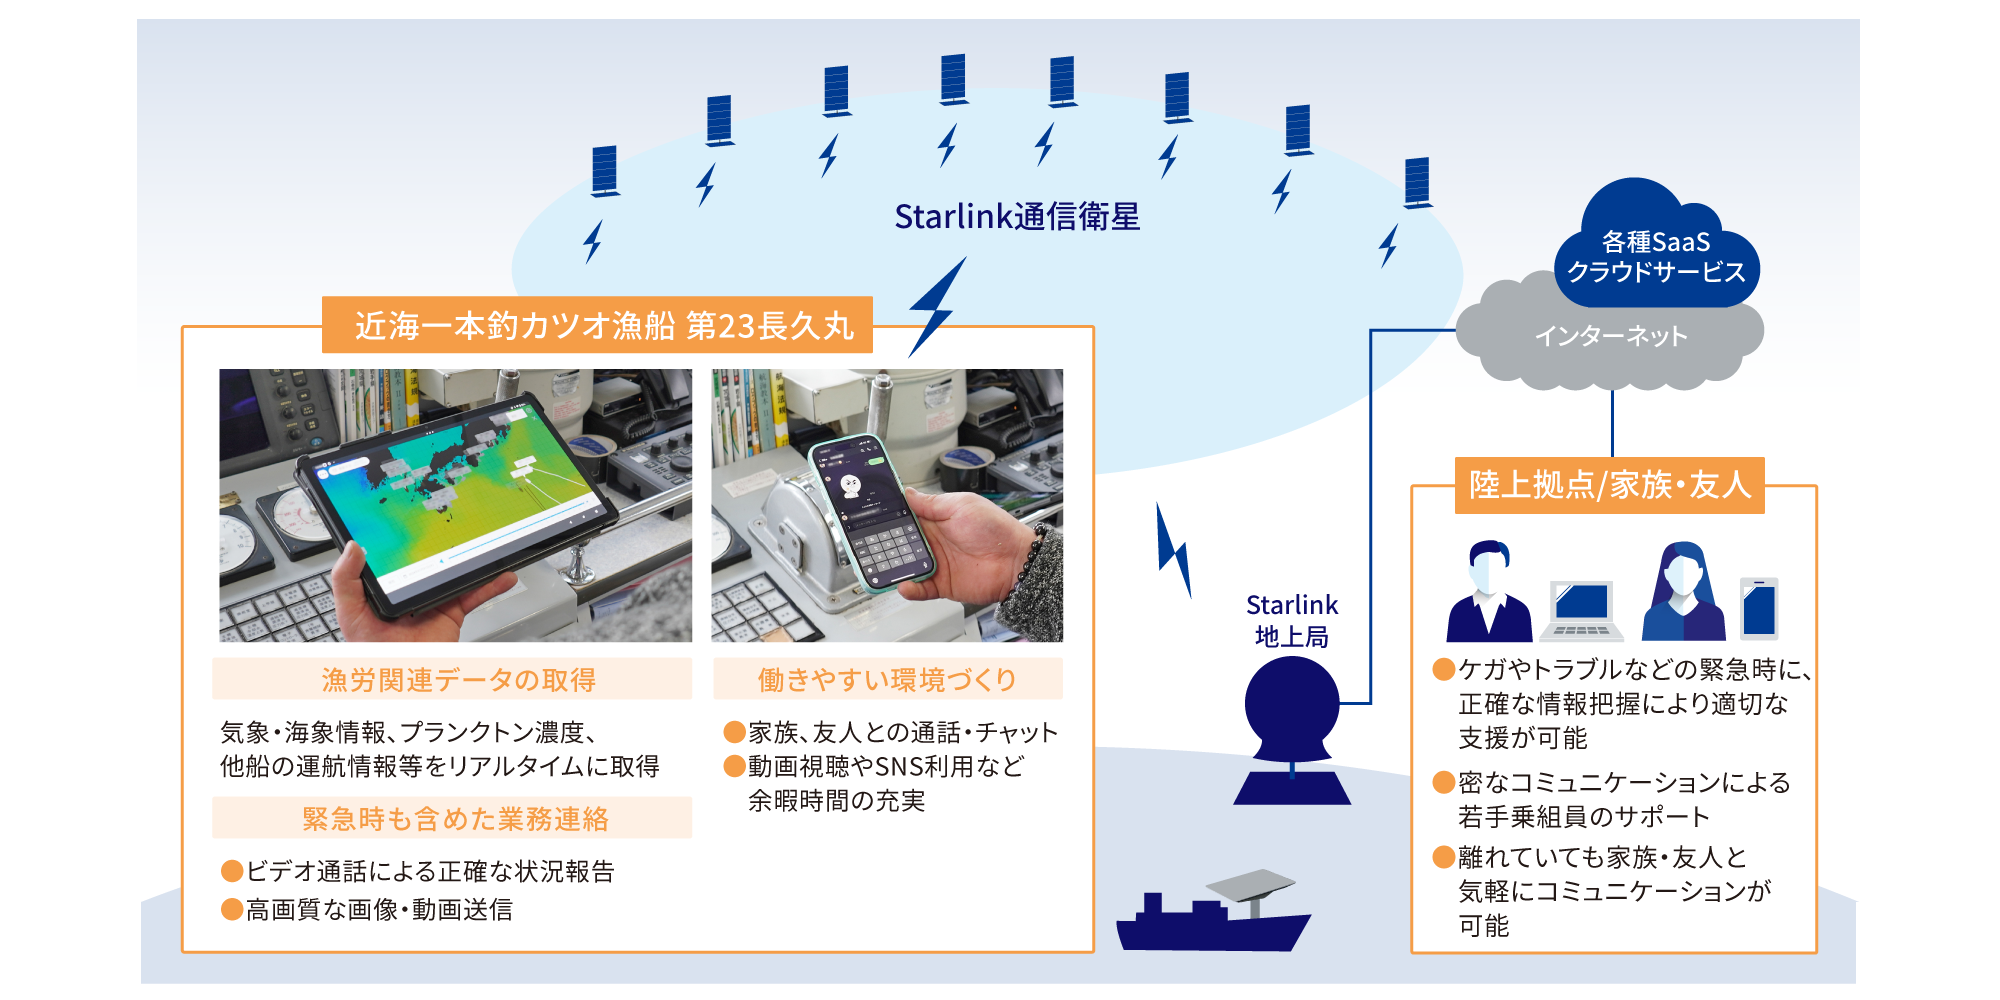 Starlink通信衛星を活用して、海上の近海一本釣カツオ漁船 第23長久丸と陸上拠点の家族・友人と情報共有、コミュニケーションが可能に。漁労関連データの取得や働きやすい環境づくり、緊急時も含めた業務連絡がとれるようになりました。